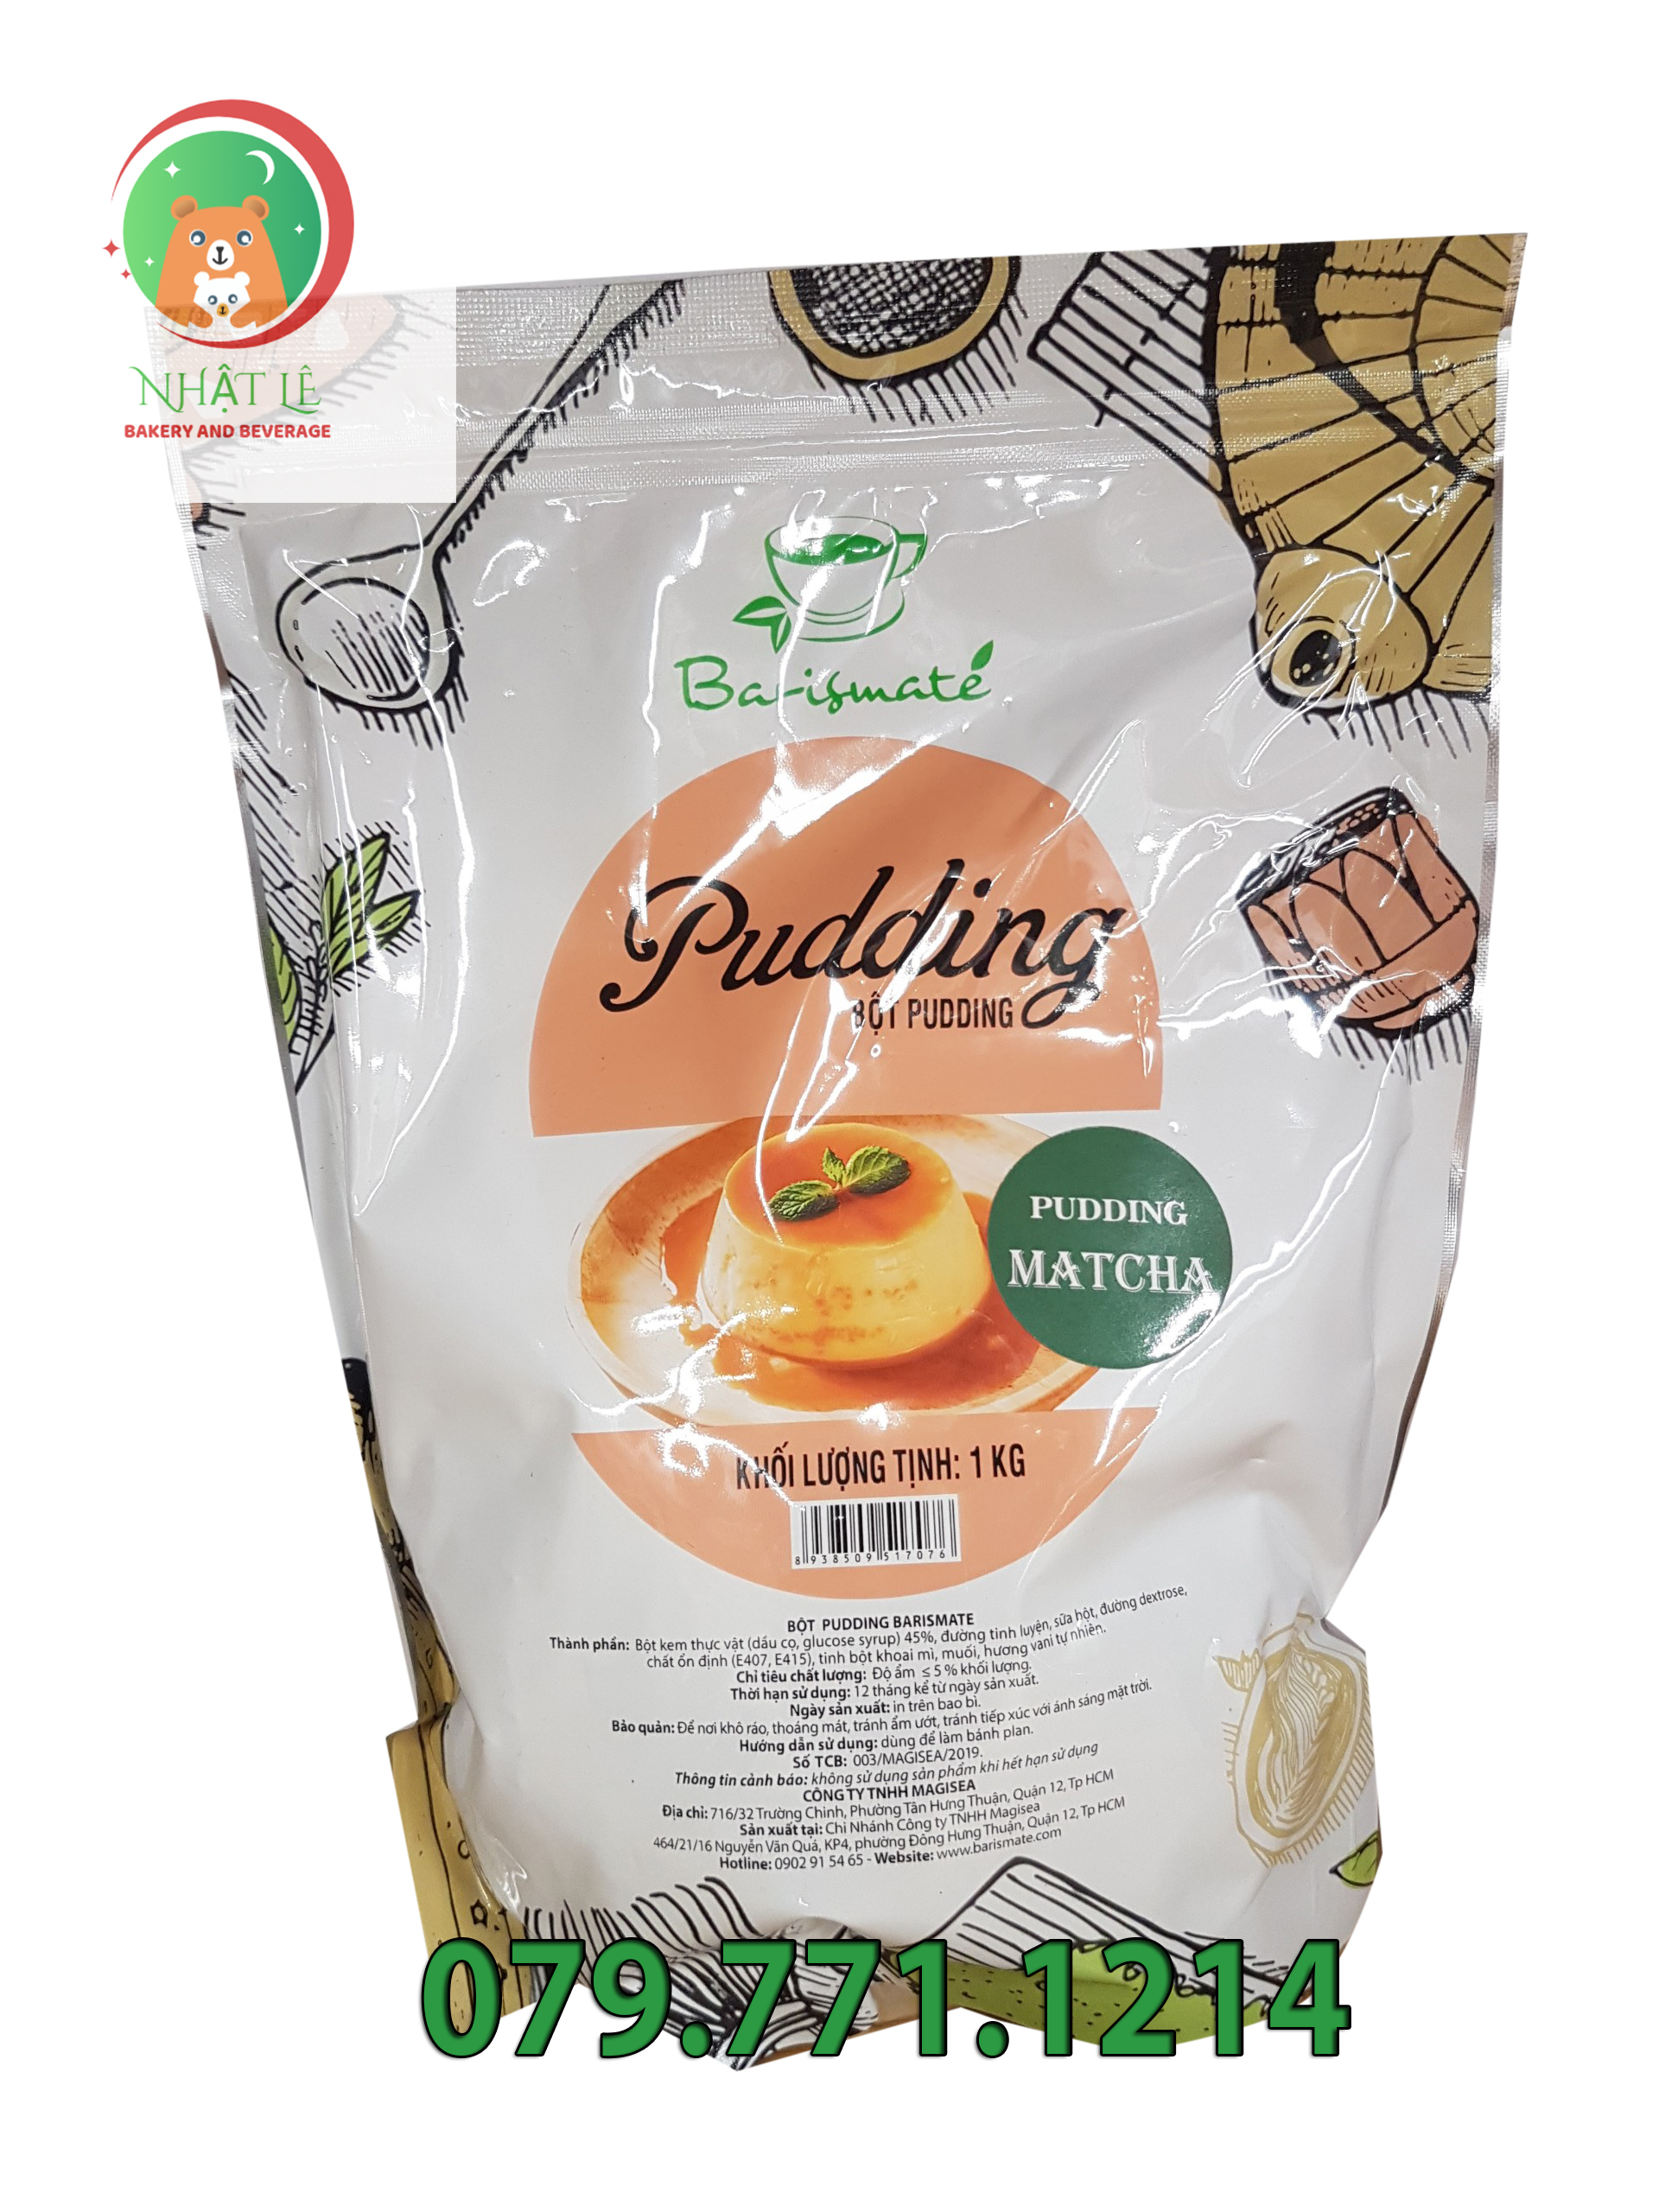 Bột Pudding Matcha Flan Matcha hiệu BARISMATE gói 1kg